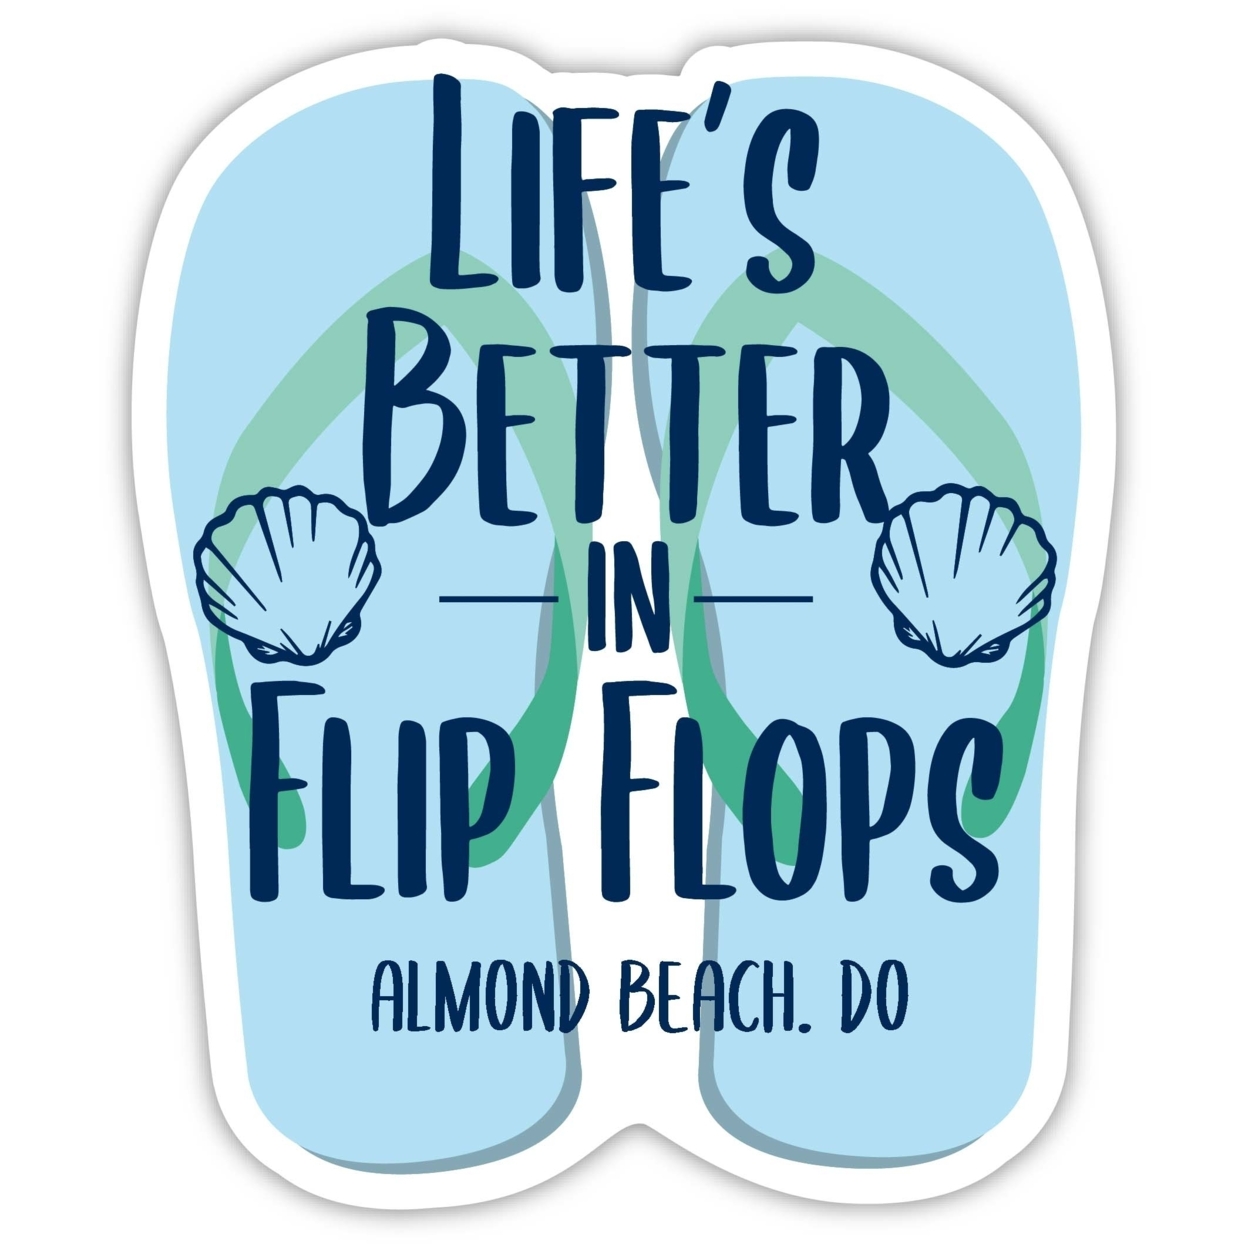 Almond Beach Dominican Republic Souvenir 4 Inch Vinyl Decal Sticker Flip Flop Design